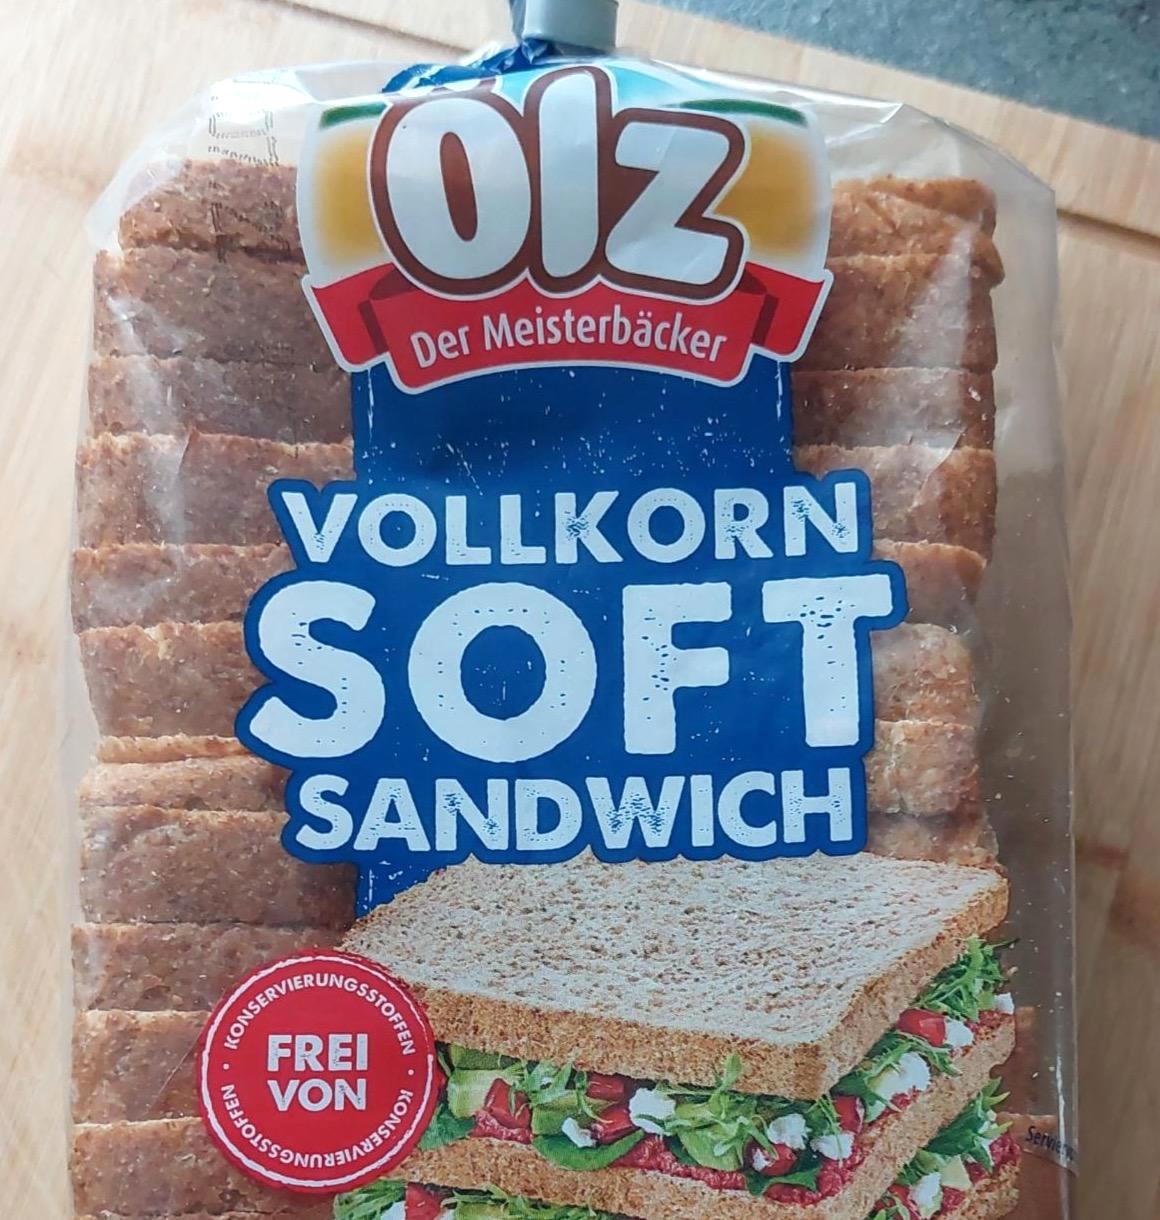 Képek - Vollkorn soft sandwich Ölz